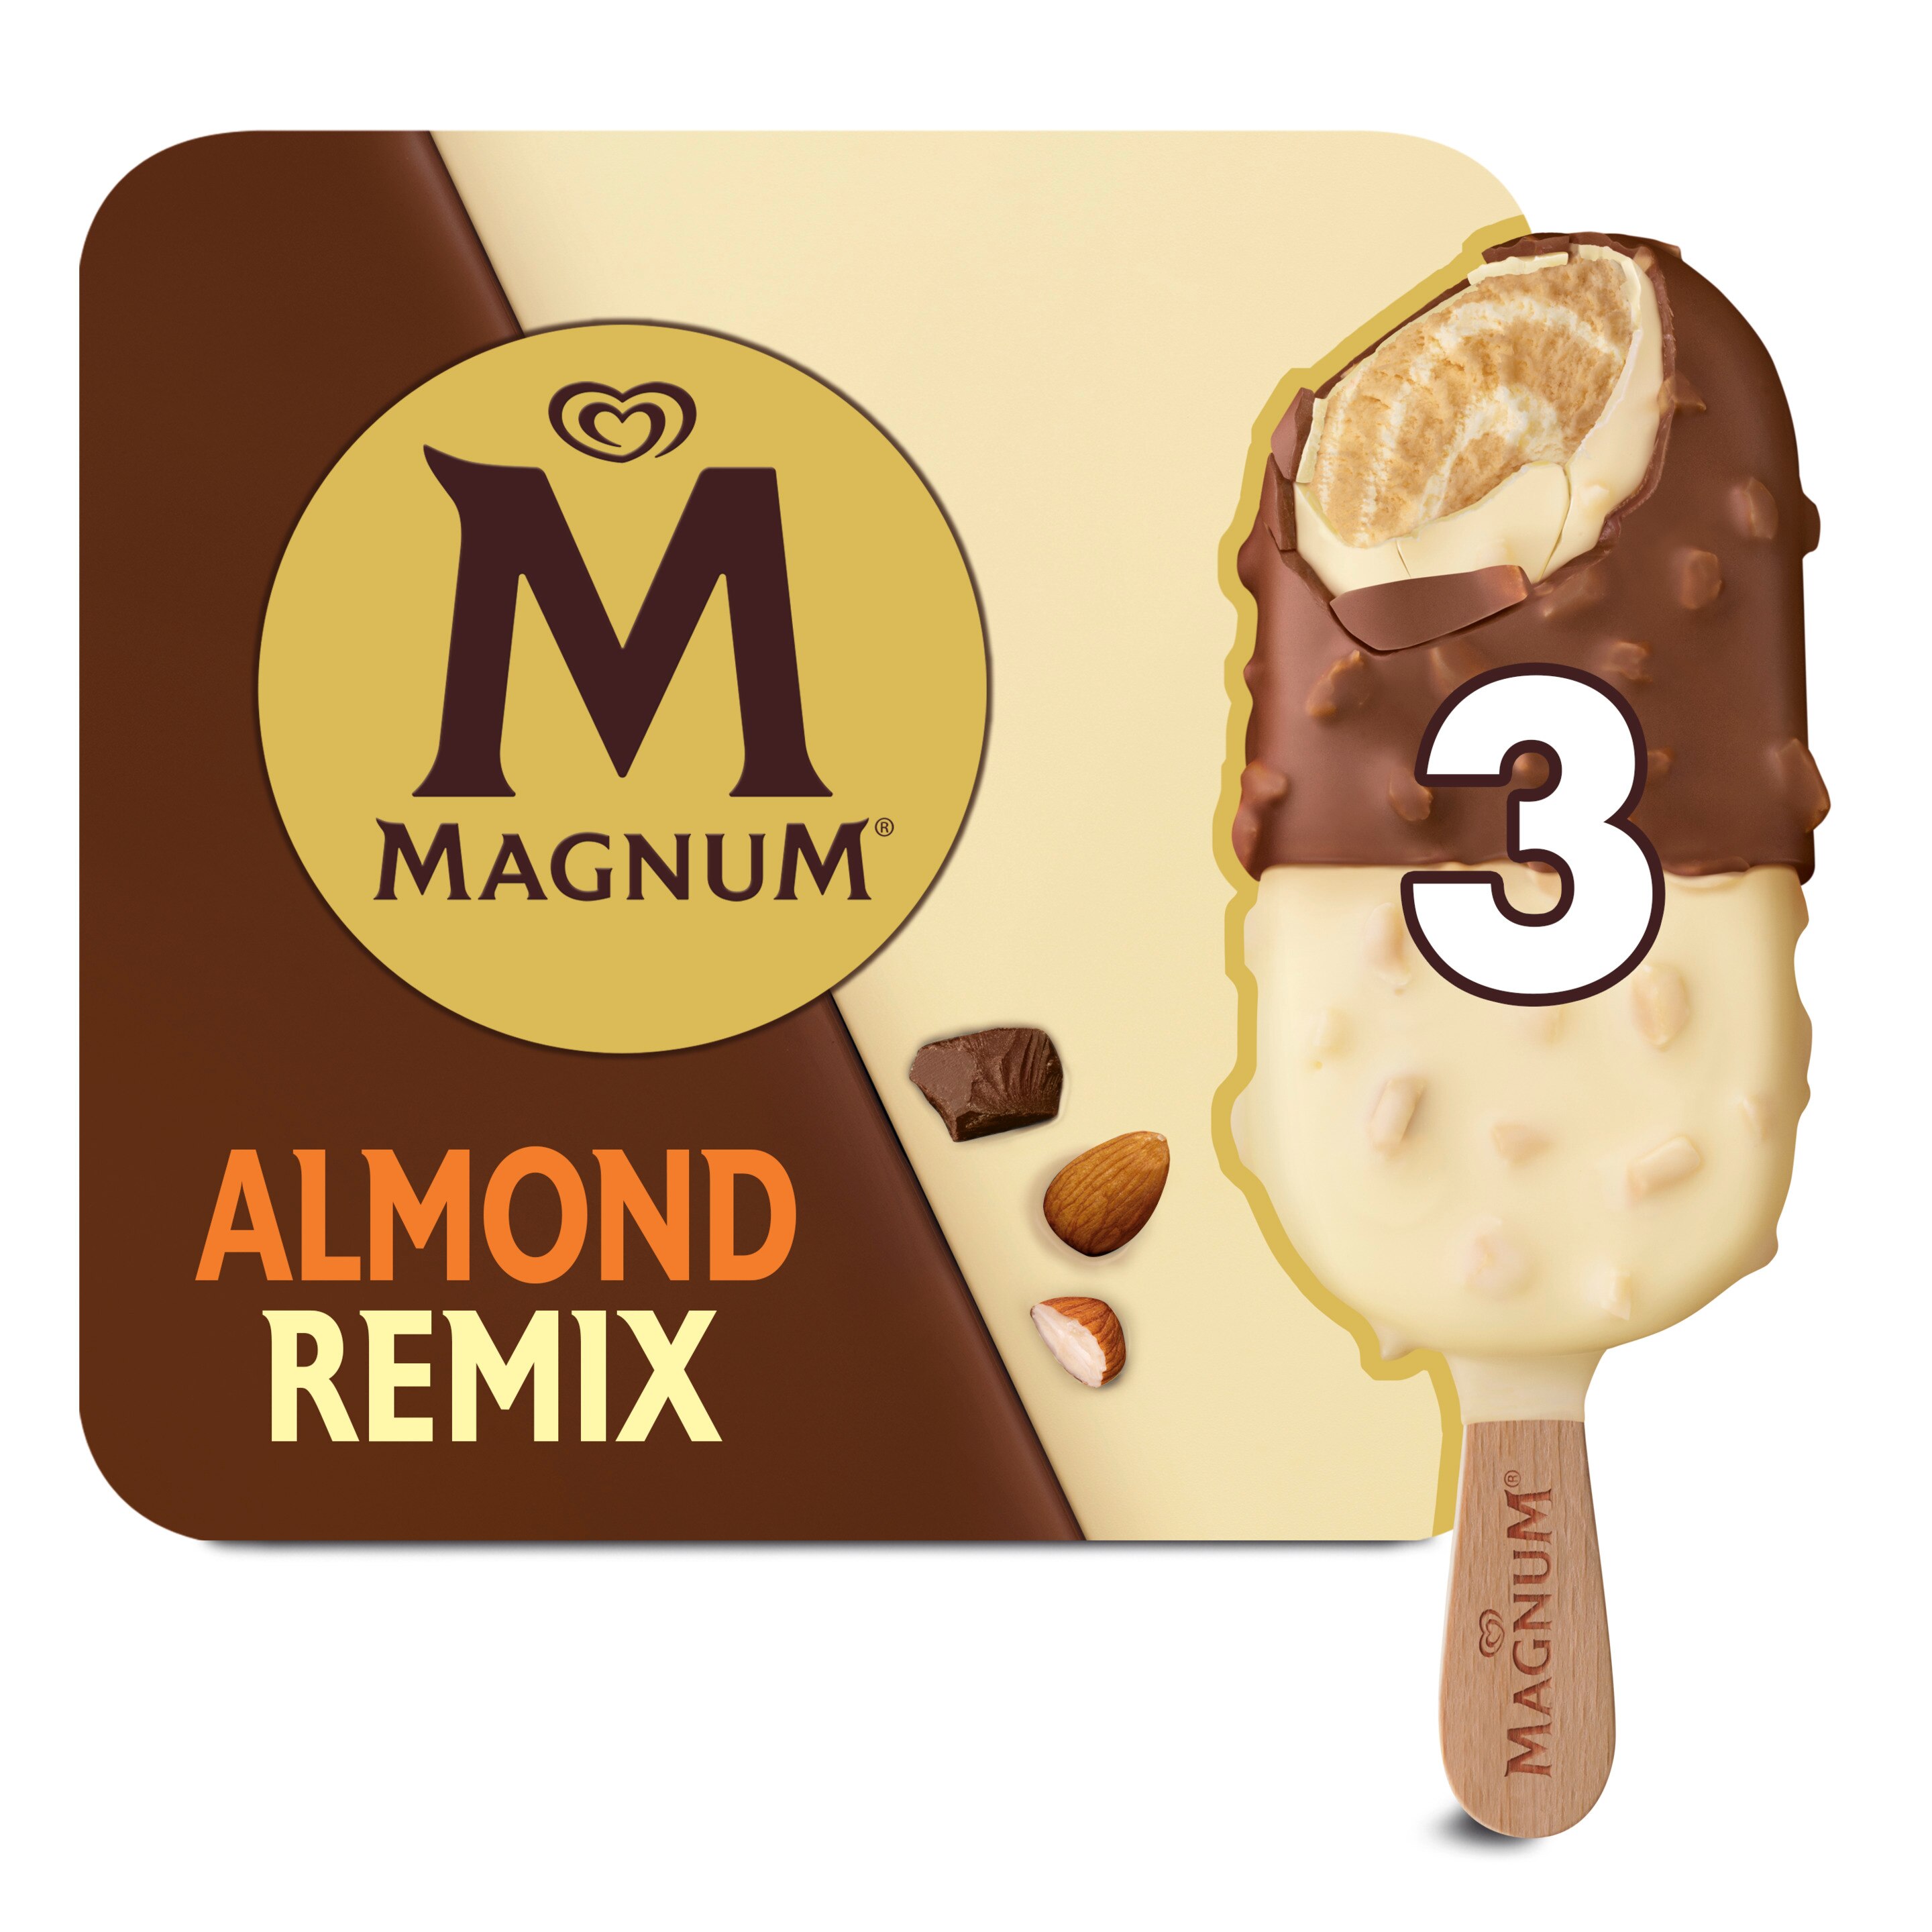 Magnum IJs Almond Remix